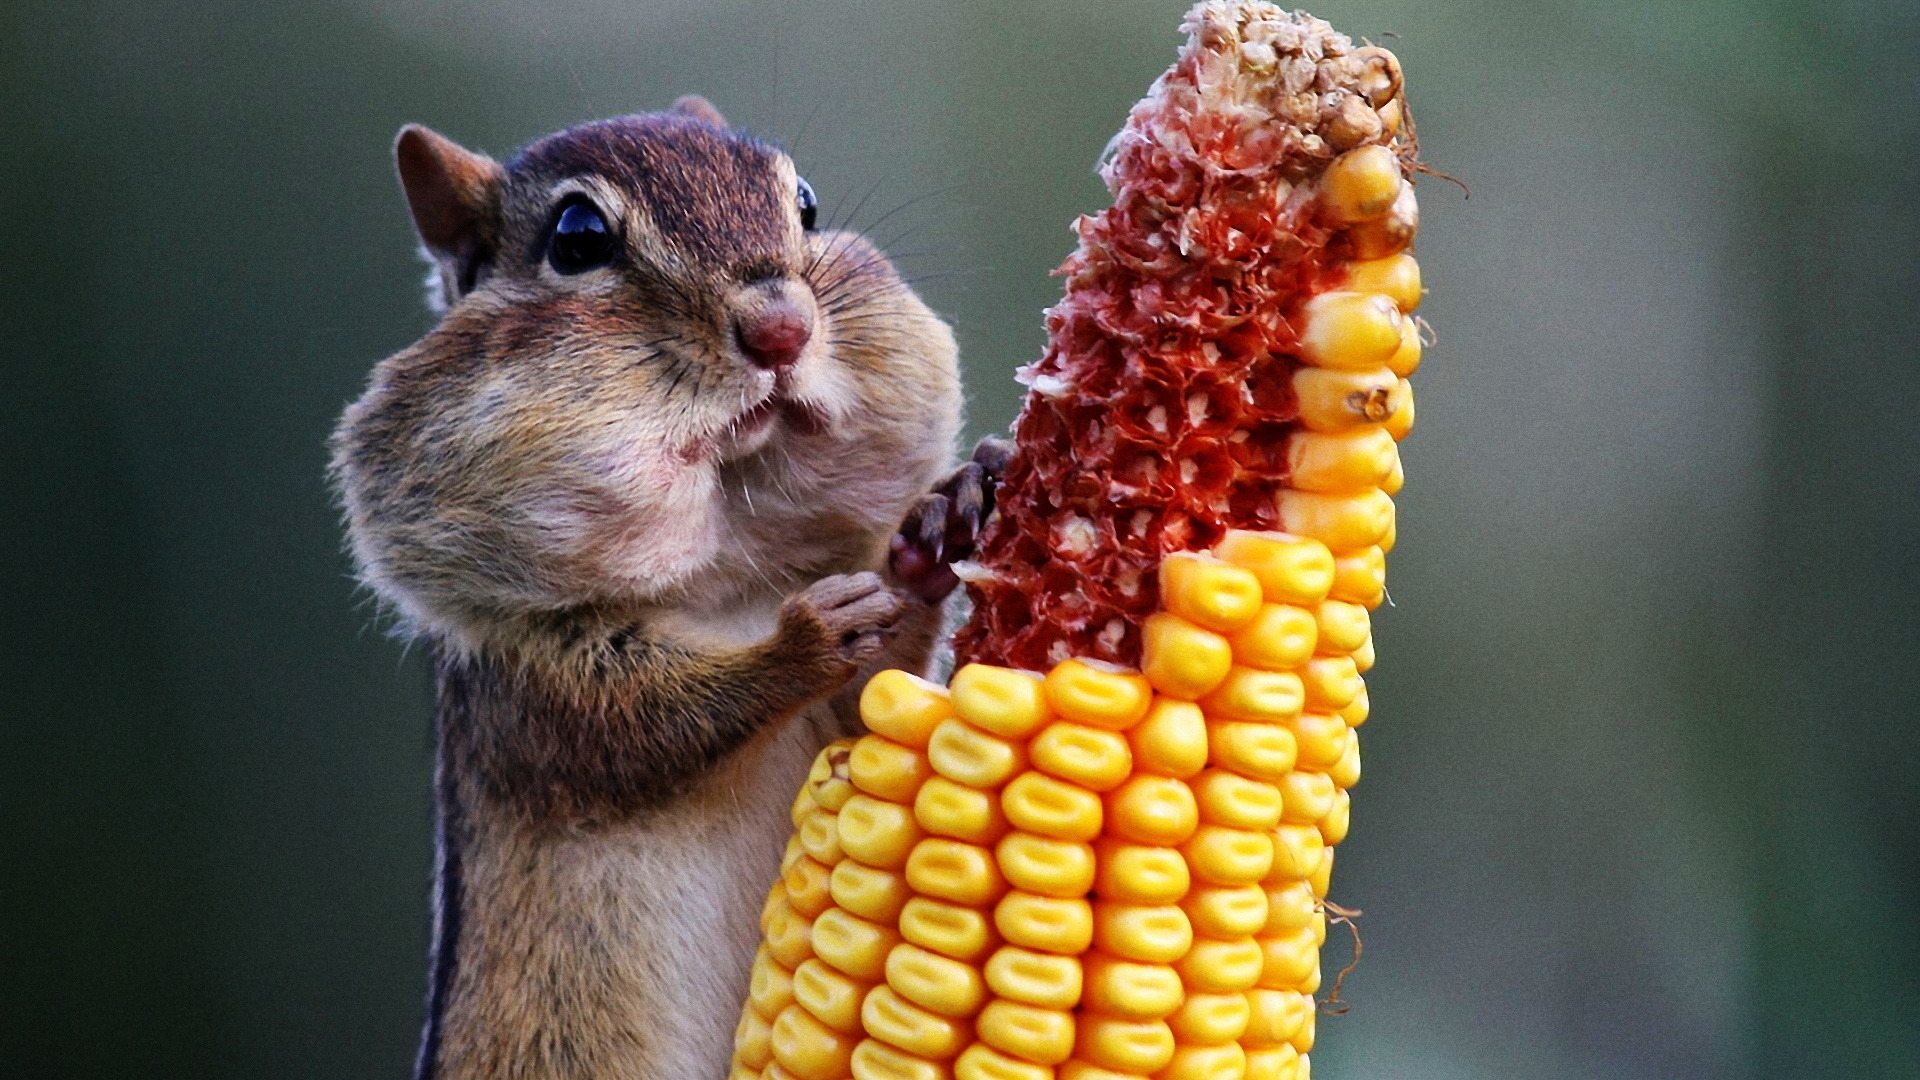 Chipmunk Eating Corn for 1920 x 1080 HDTV 1080p resolution